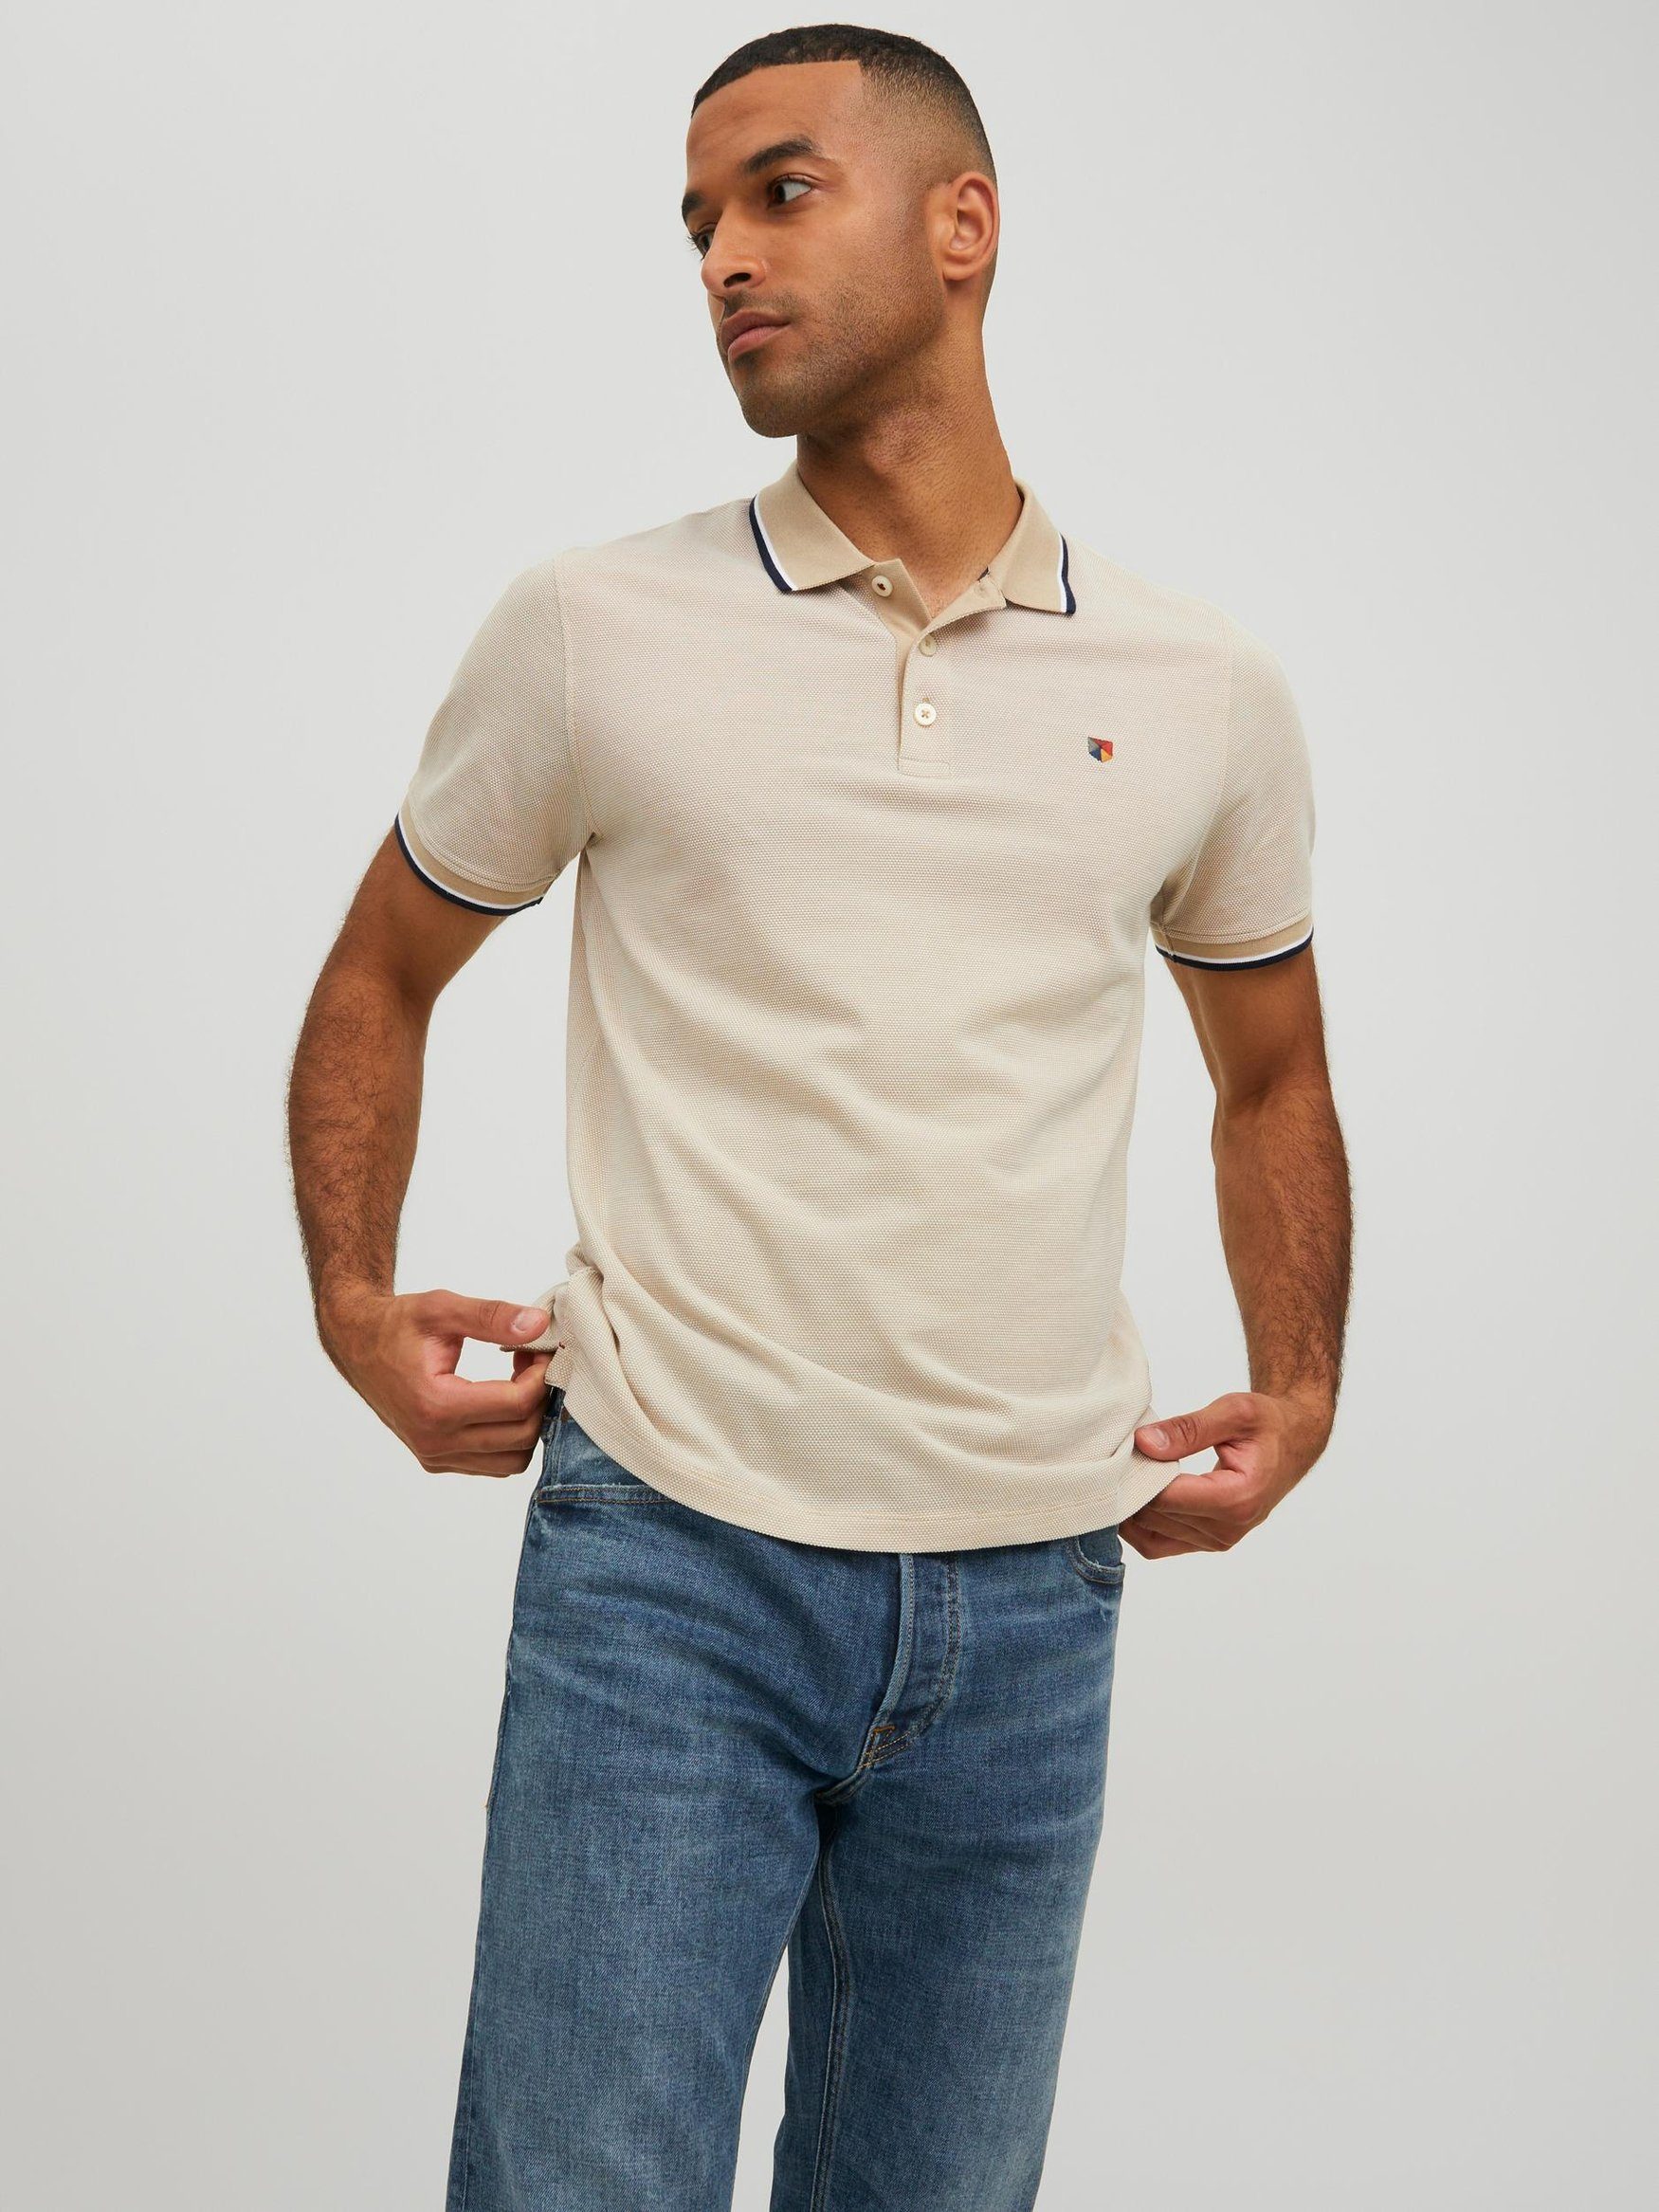 Jones Jack T-Shirt Basic Kurzarm Polo Hemd Weiß in T-Shirt 5525 Pique JPRBLUWIN &